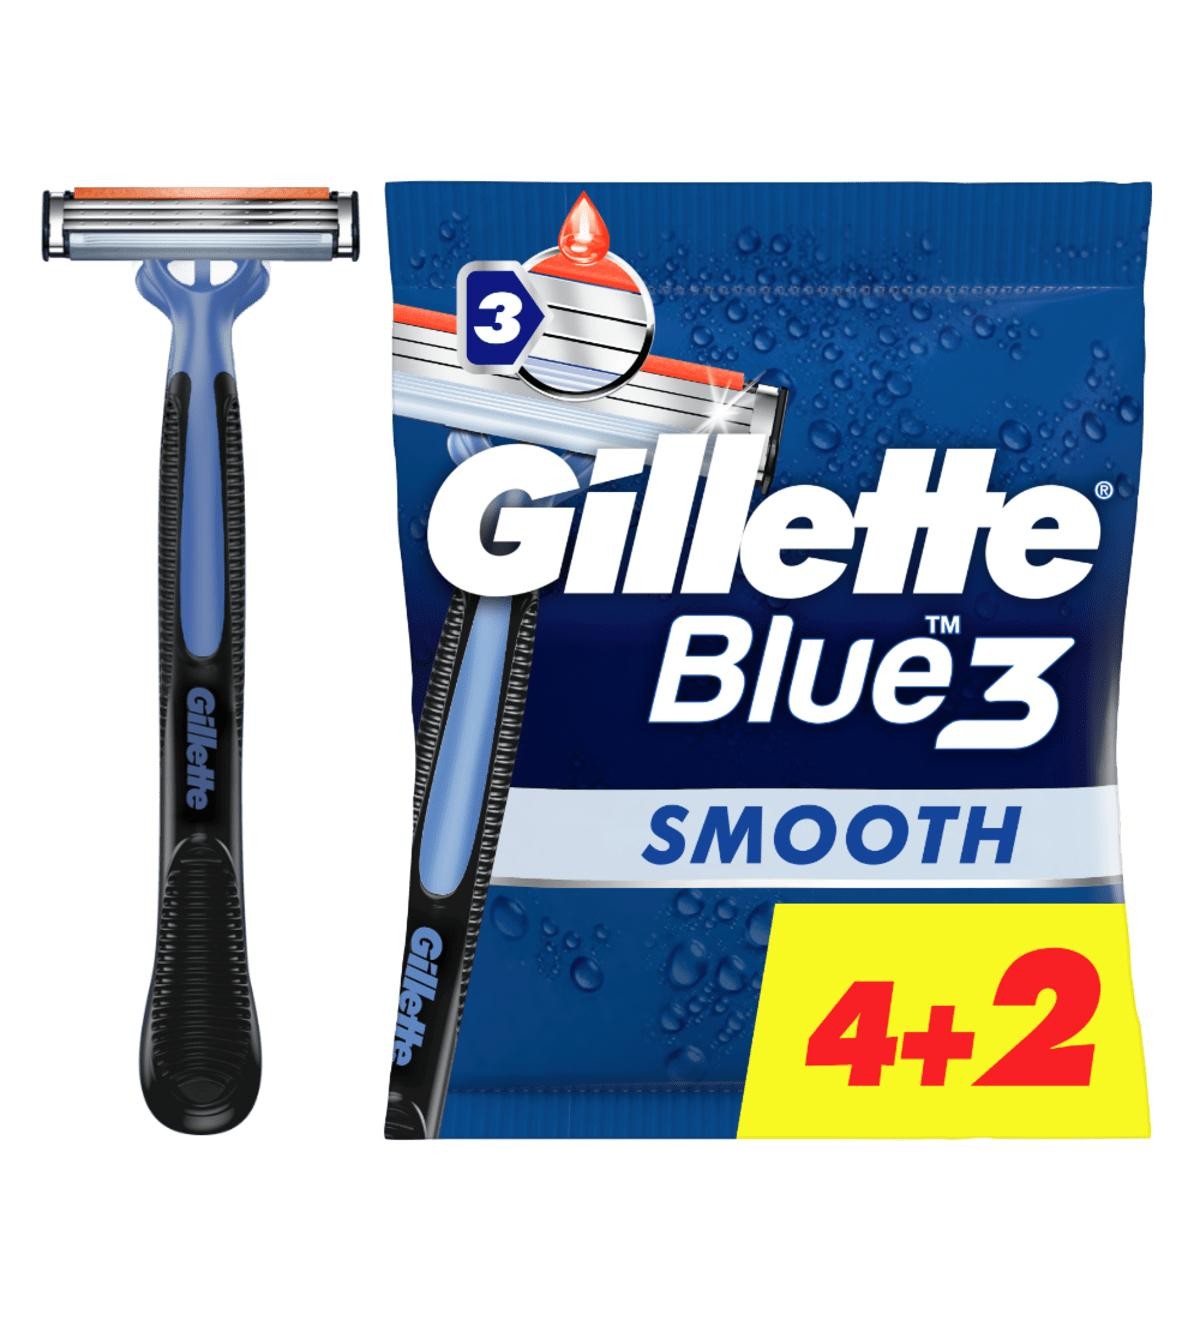 Gillette Blue3 Smooth rasoio da uomo Blu